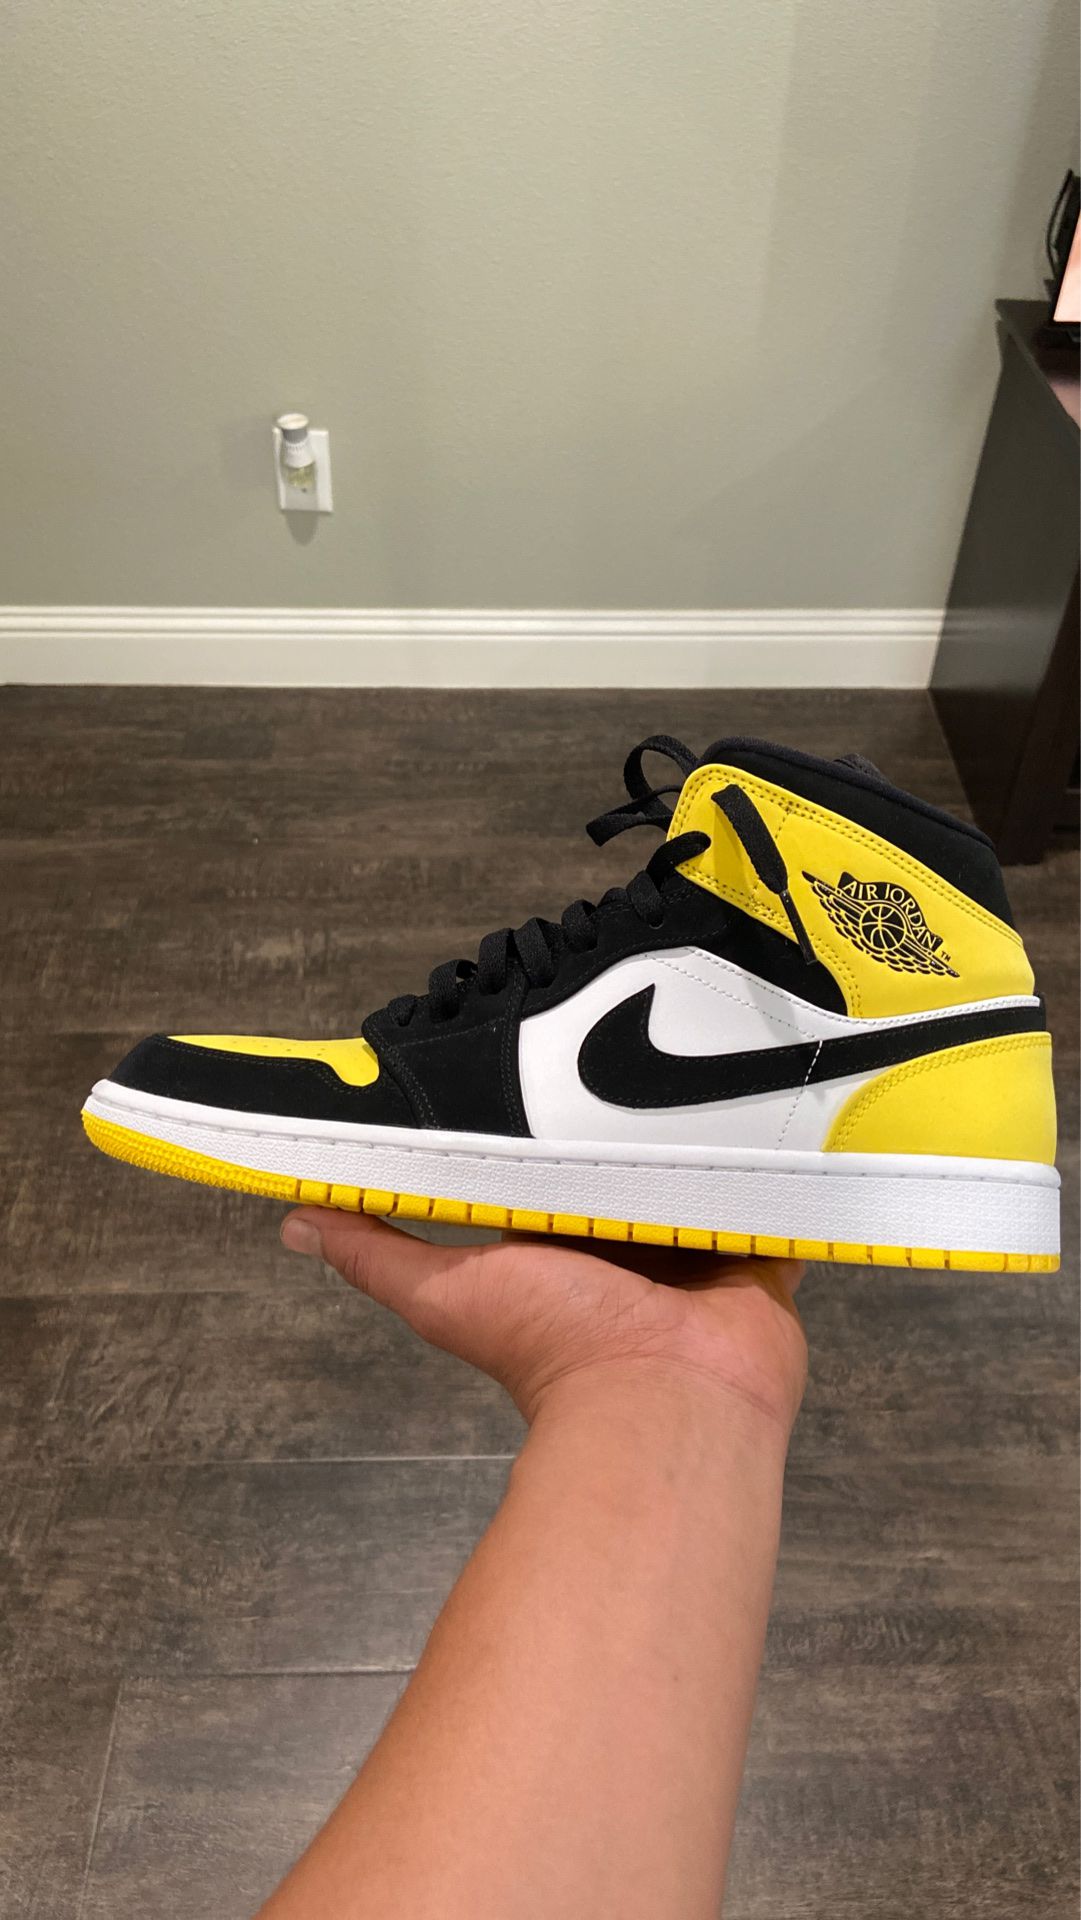 (Used) Jordan 1 Mid Yellow Toe Black $155 “size 10”